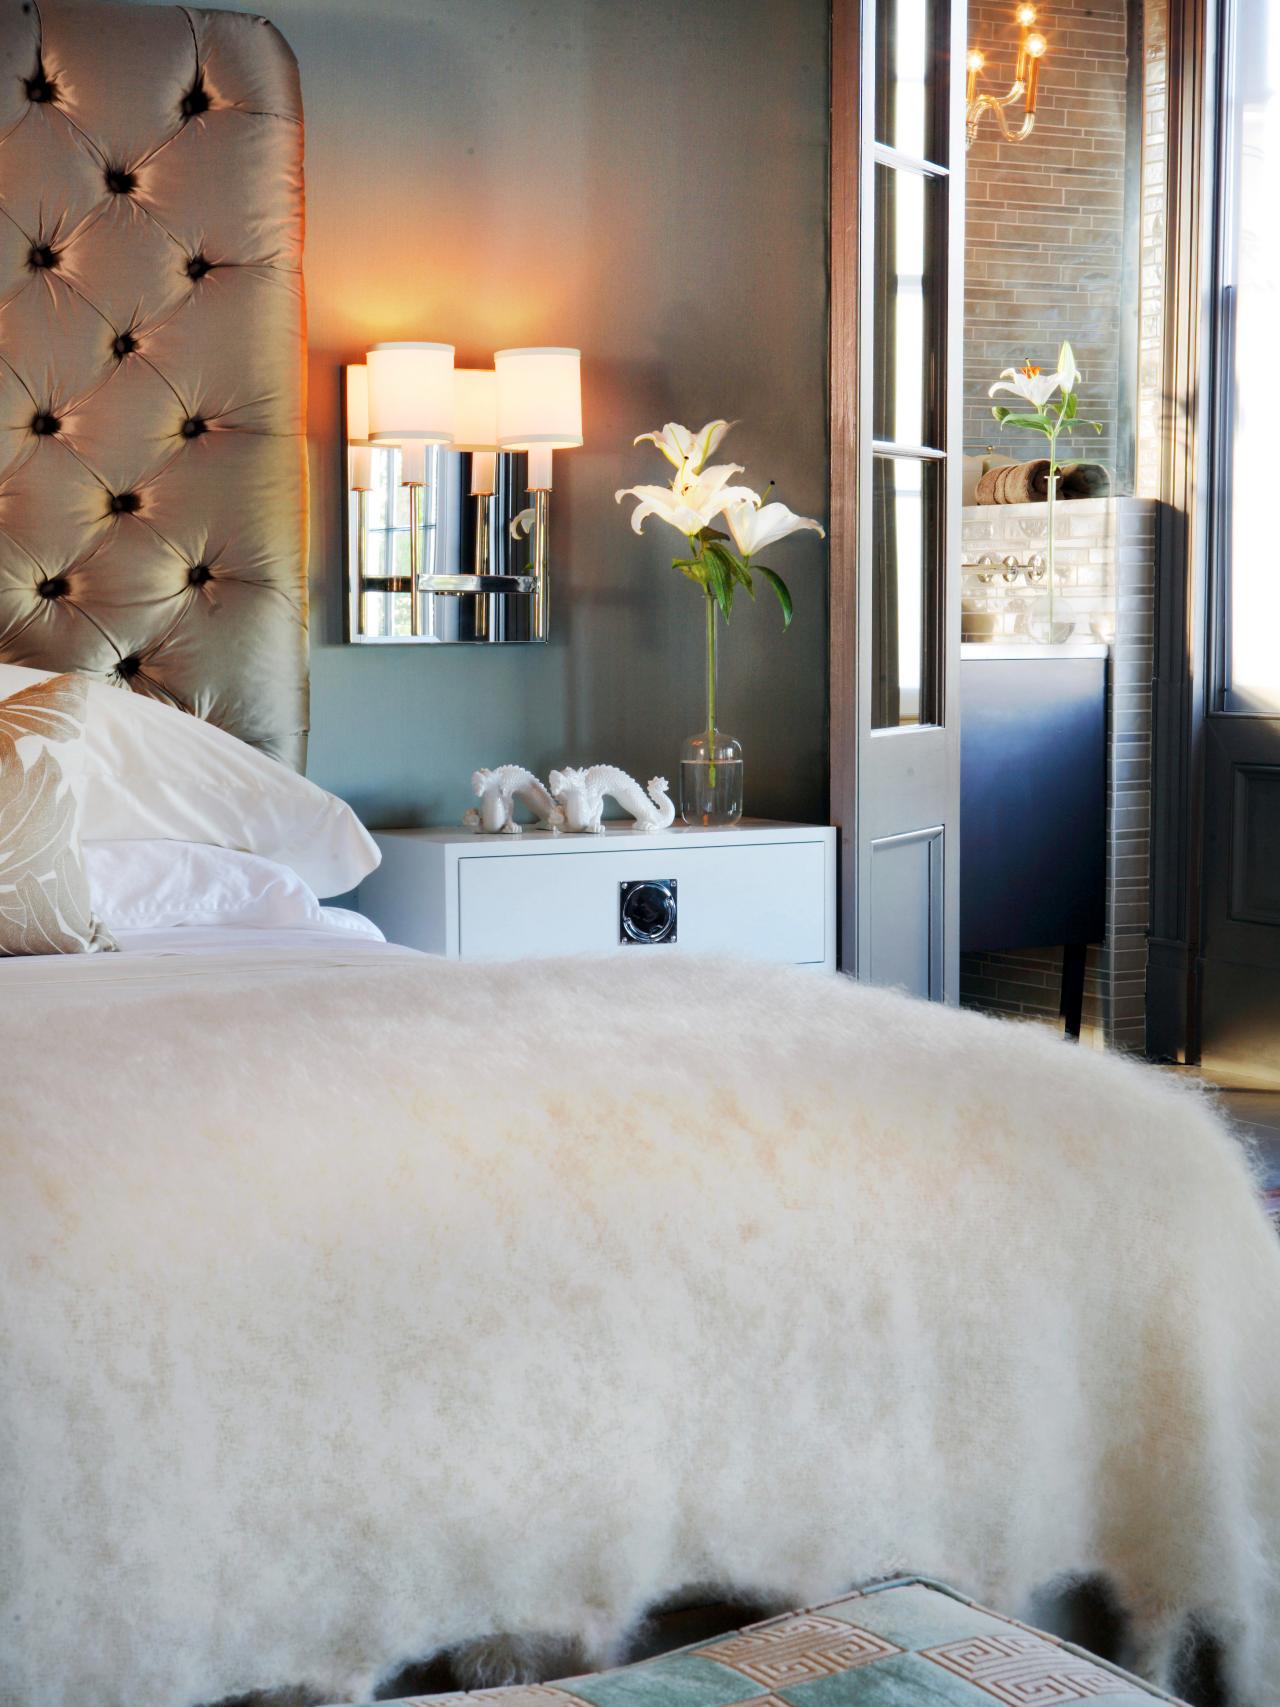 30 Amazing Bedroom Lights Design Ideas   Decoration Love